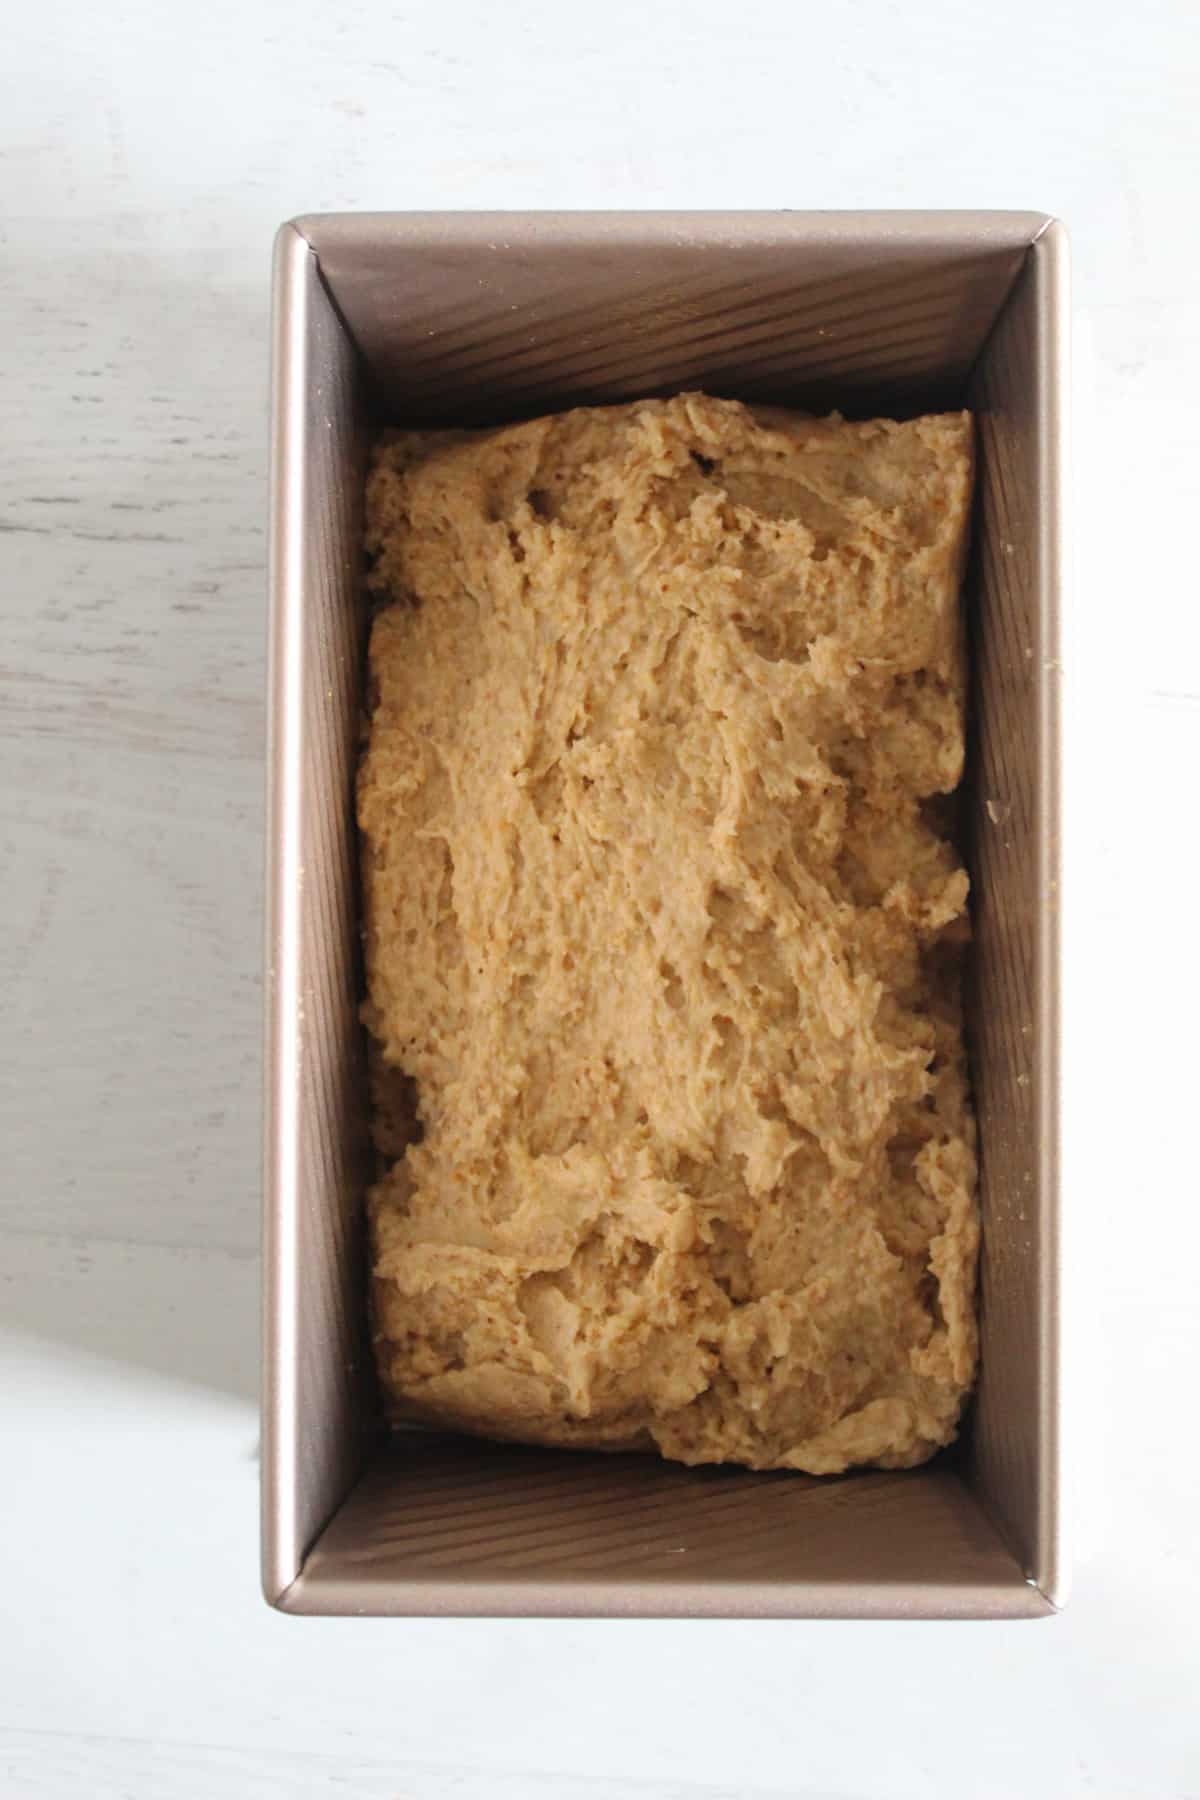 oat flour bread before rising